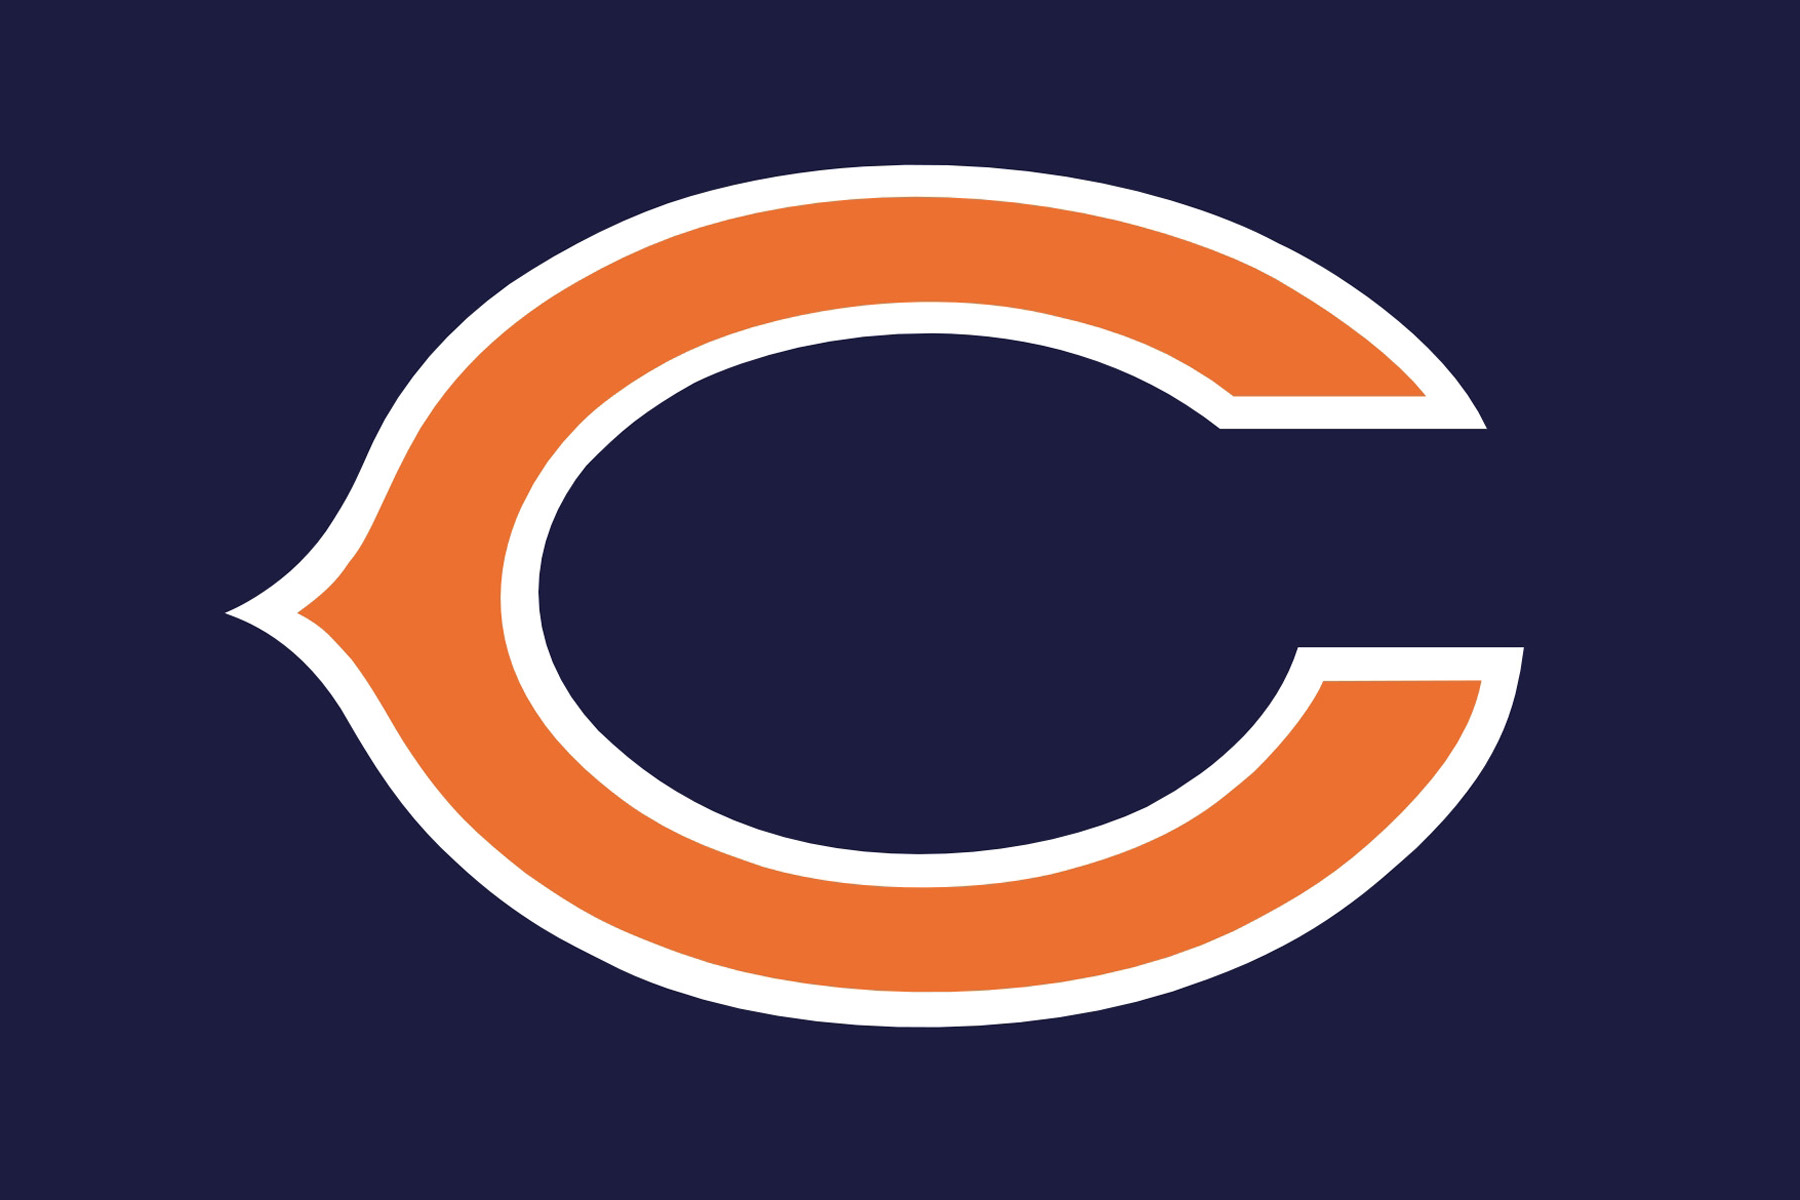 chicago bears logo clip art free - photo #2